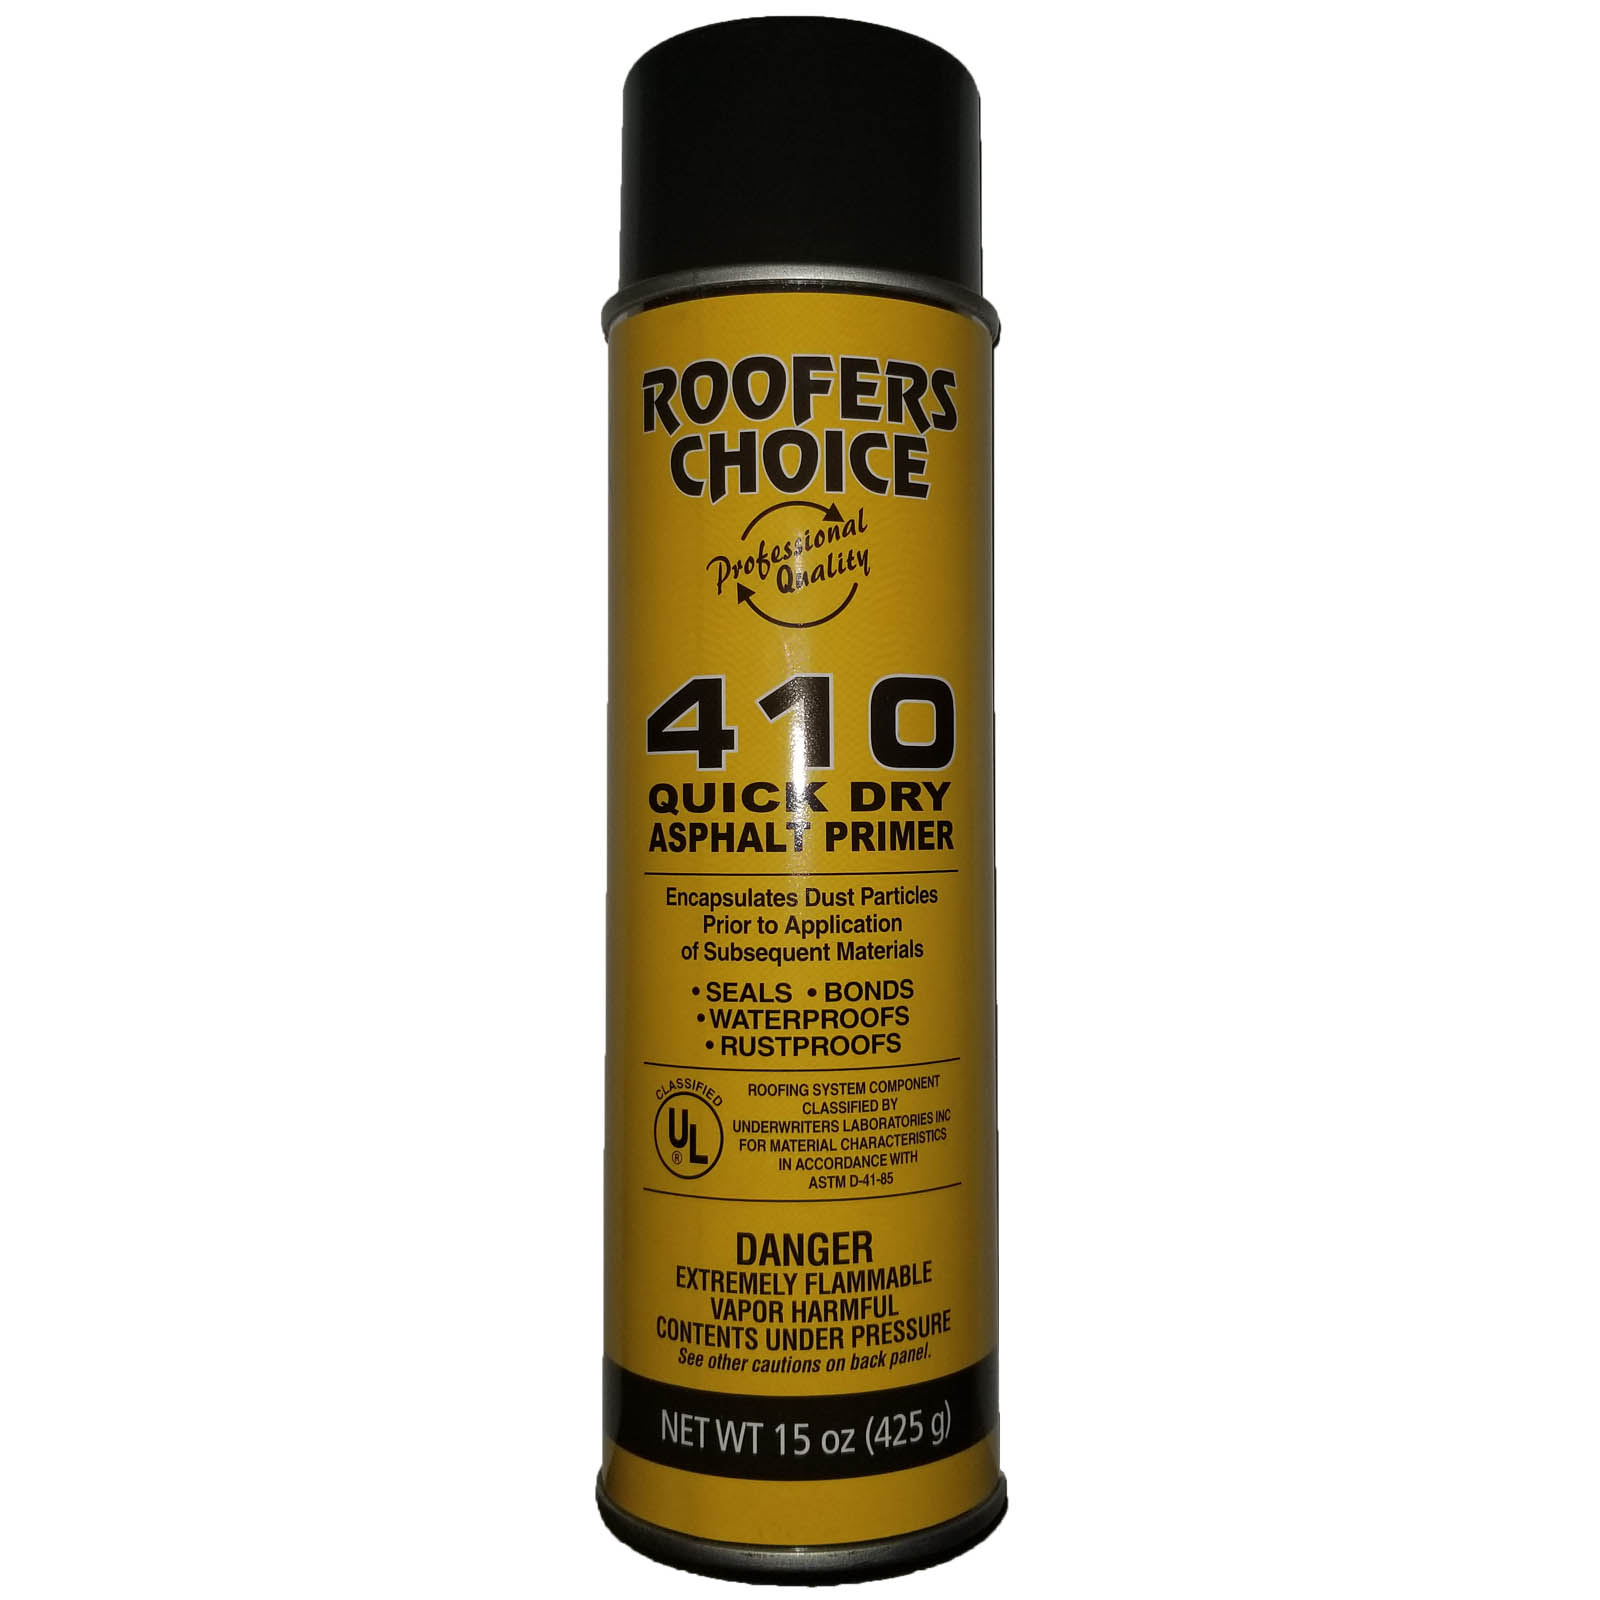 Roofers Choice 410 Quick Dry Asphalt Primer